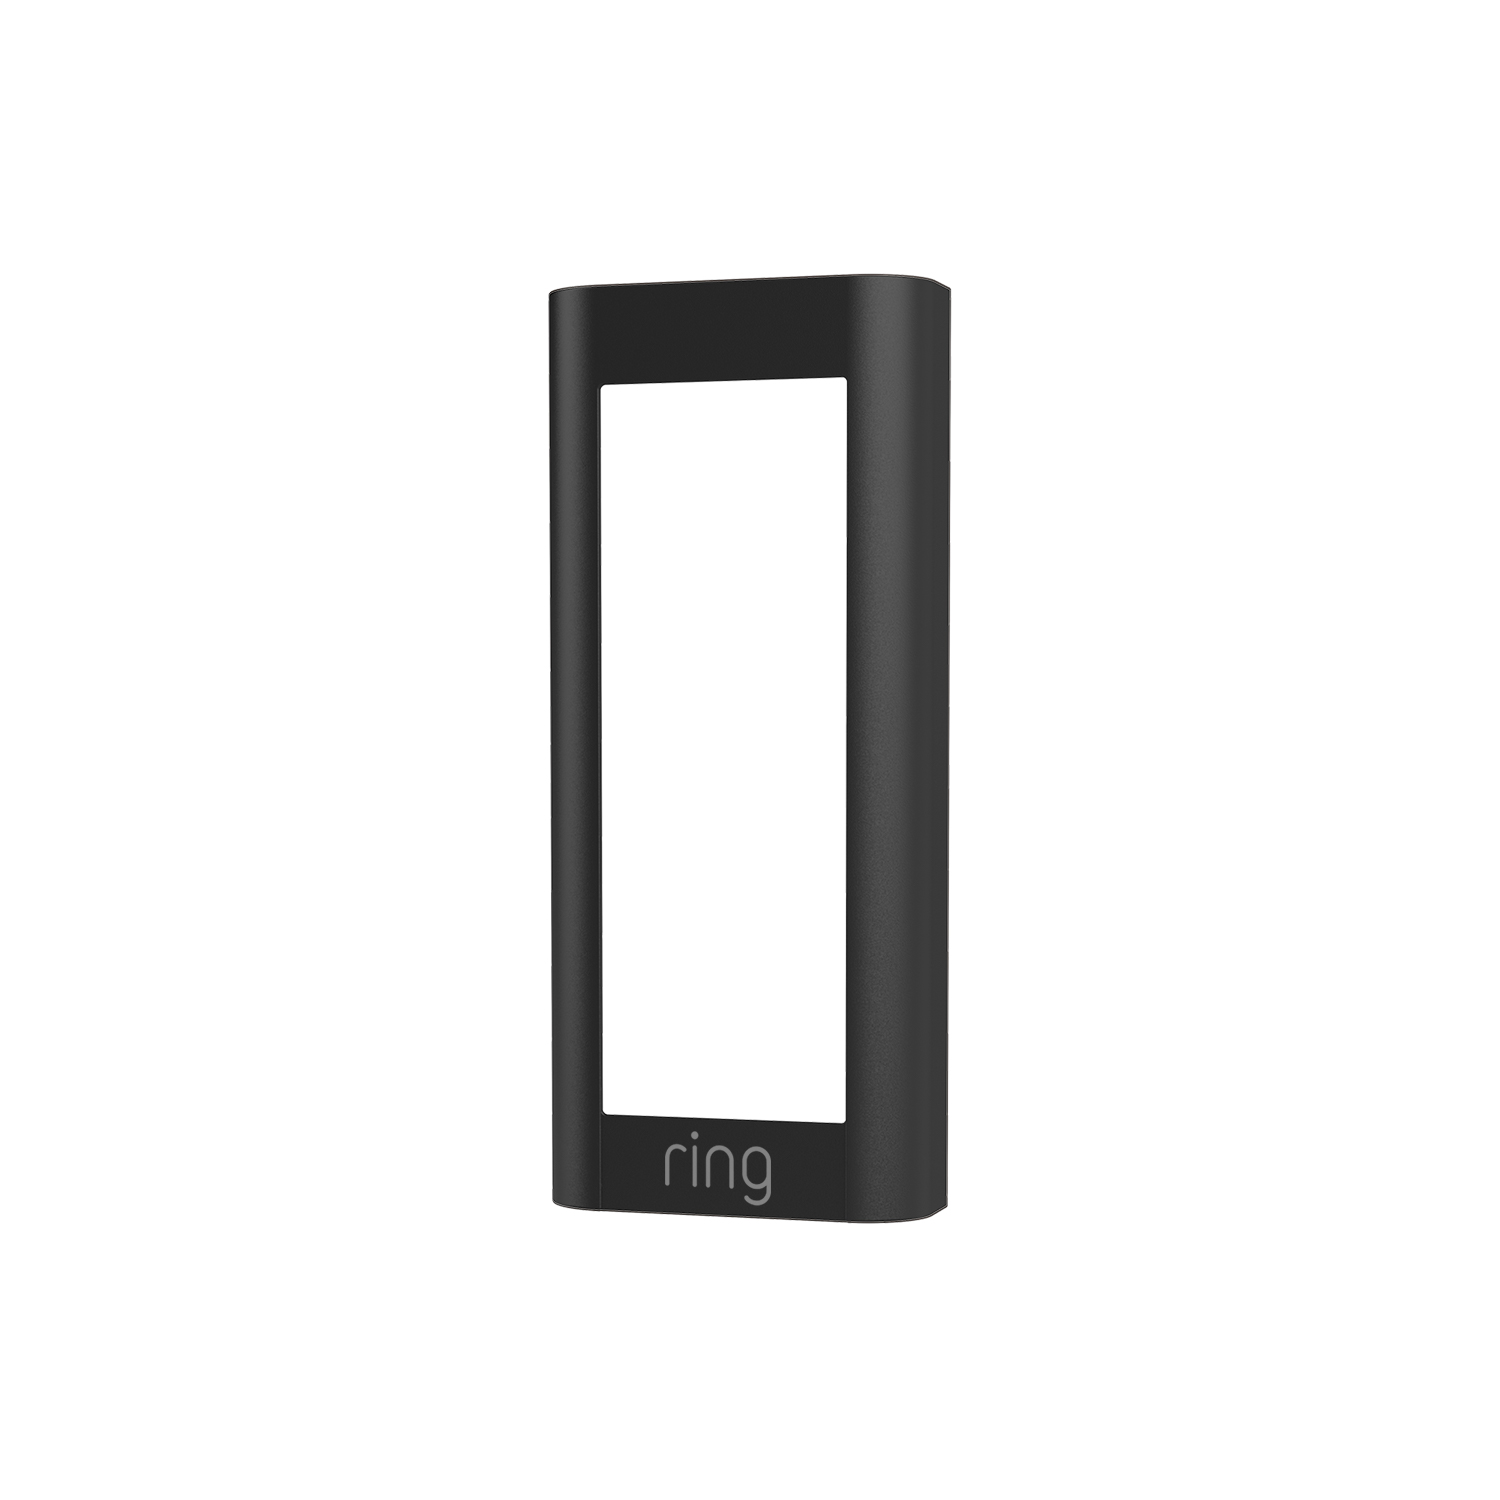 Interchangeable Faceplate (for Wired Doorbell Pro (Video Doorbell Pro 2)) - Smooth Black